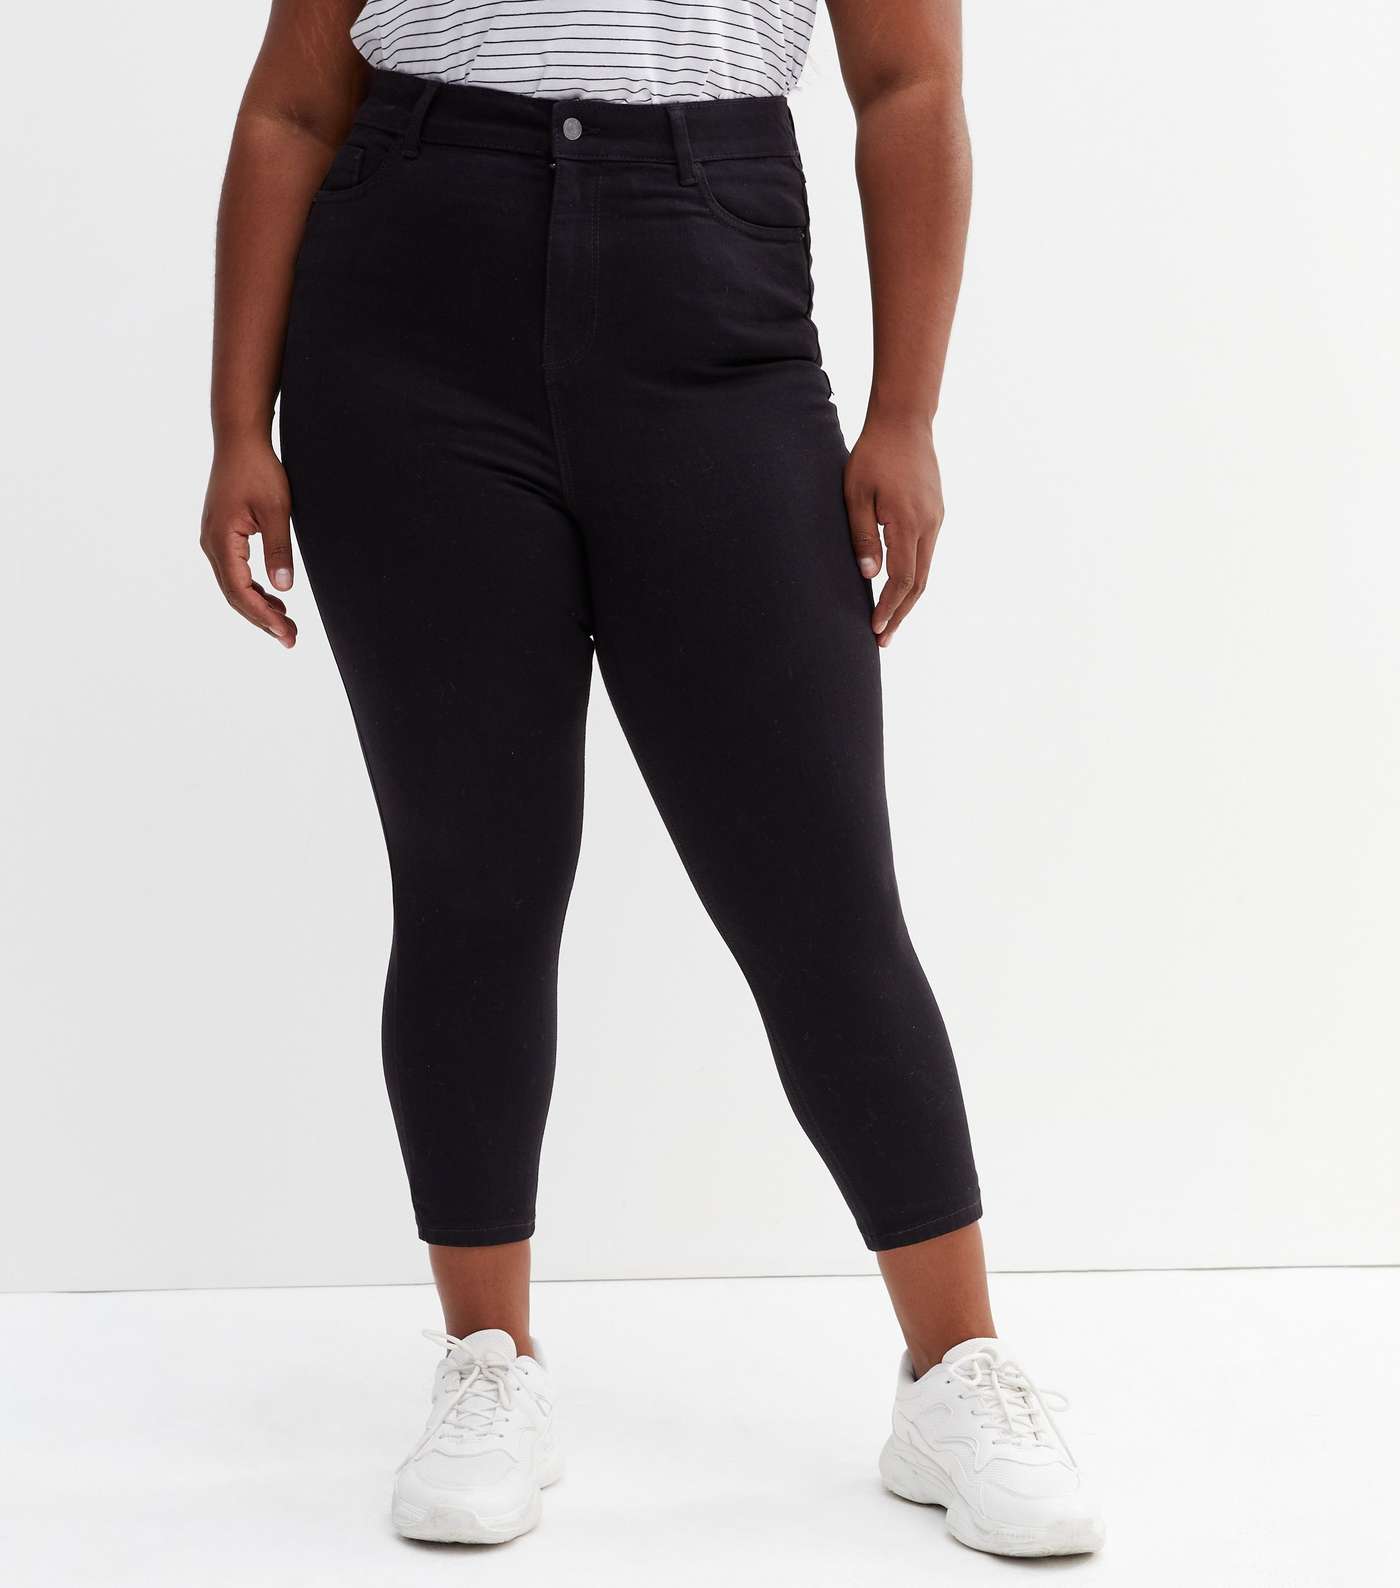 Curves Black 'Lift & Shape' Jenna Crop Skinny Jeans Image 2